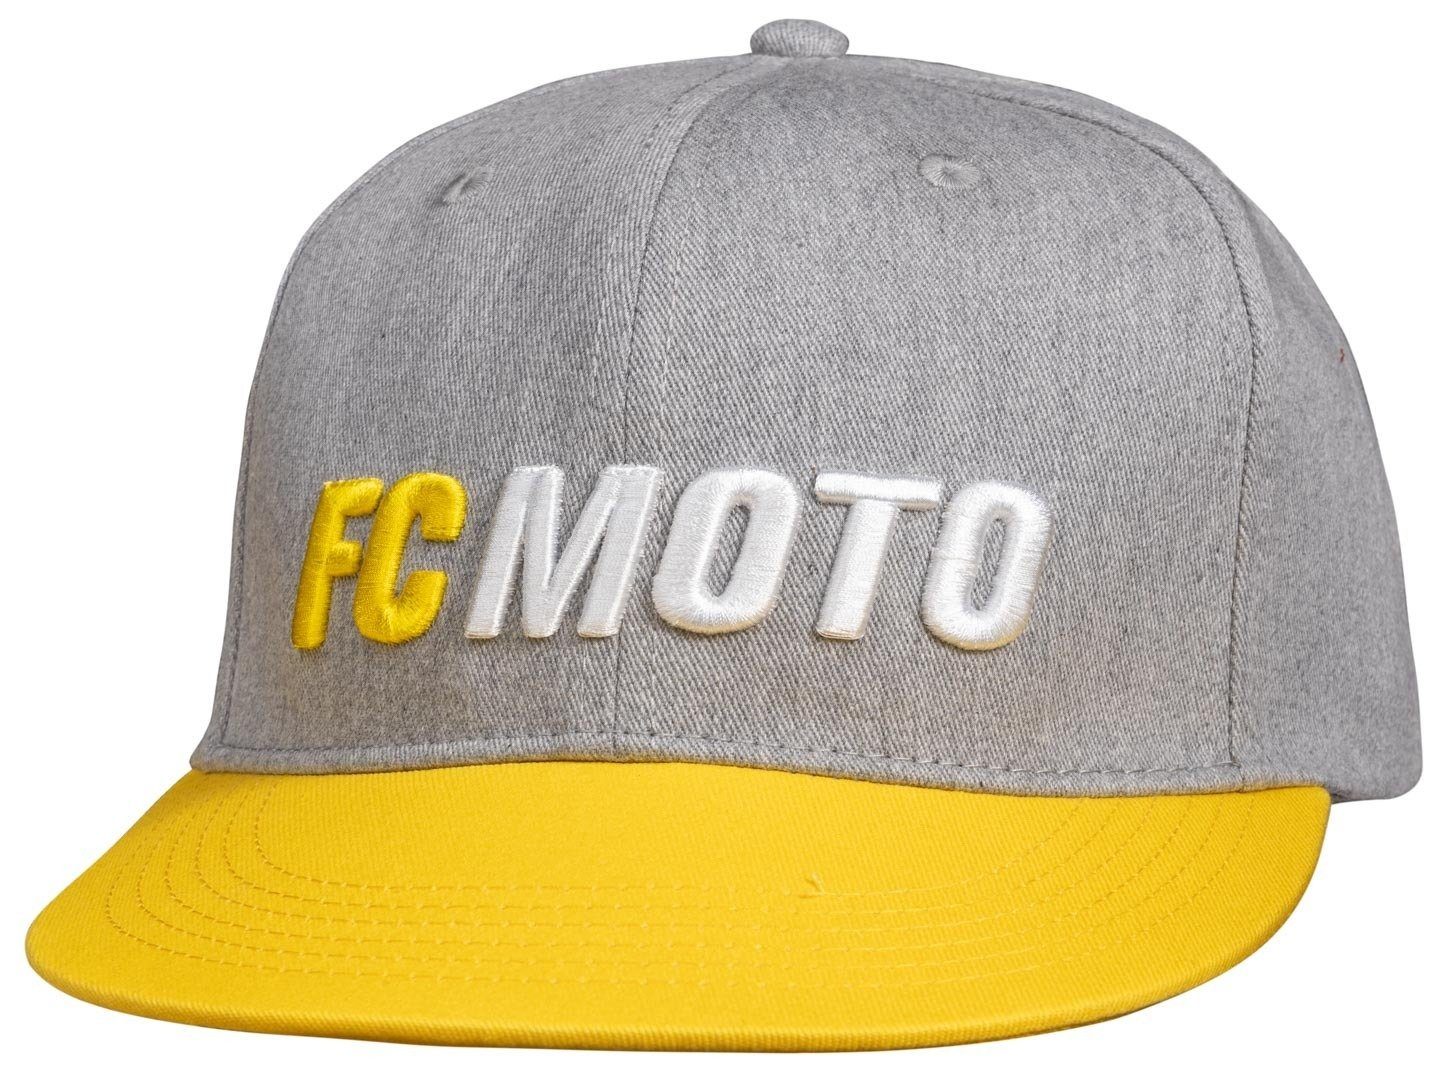 Faster-FC Grey/Yellow FC-Moto Outdoorhut Kappe